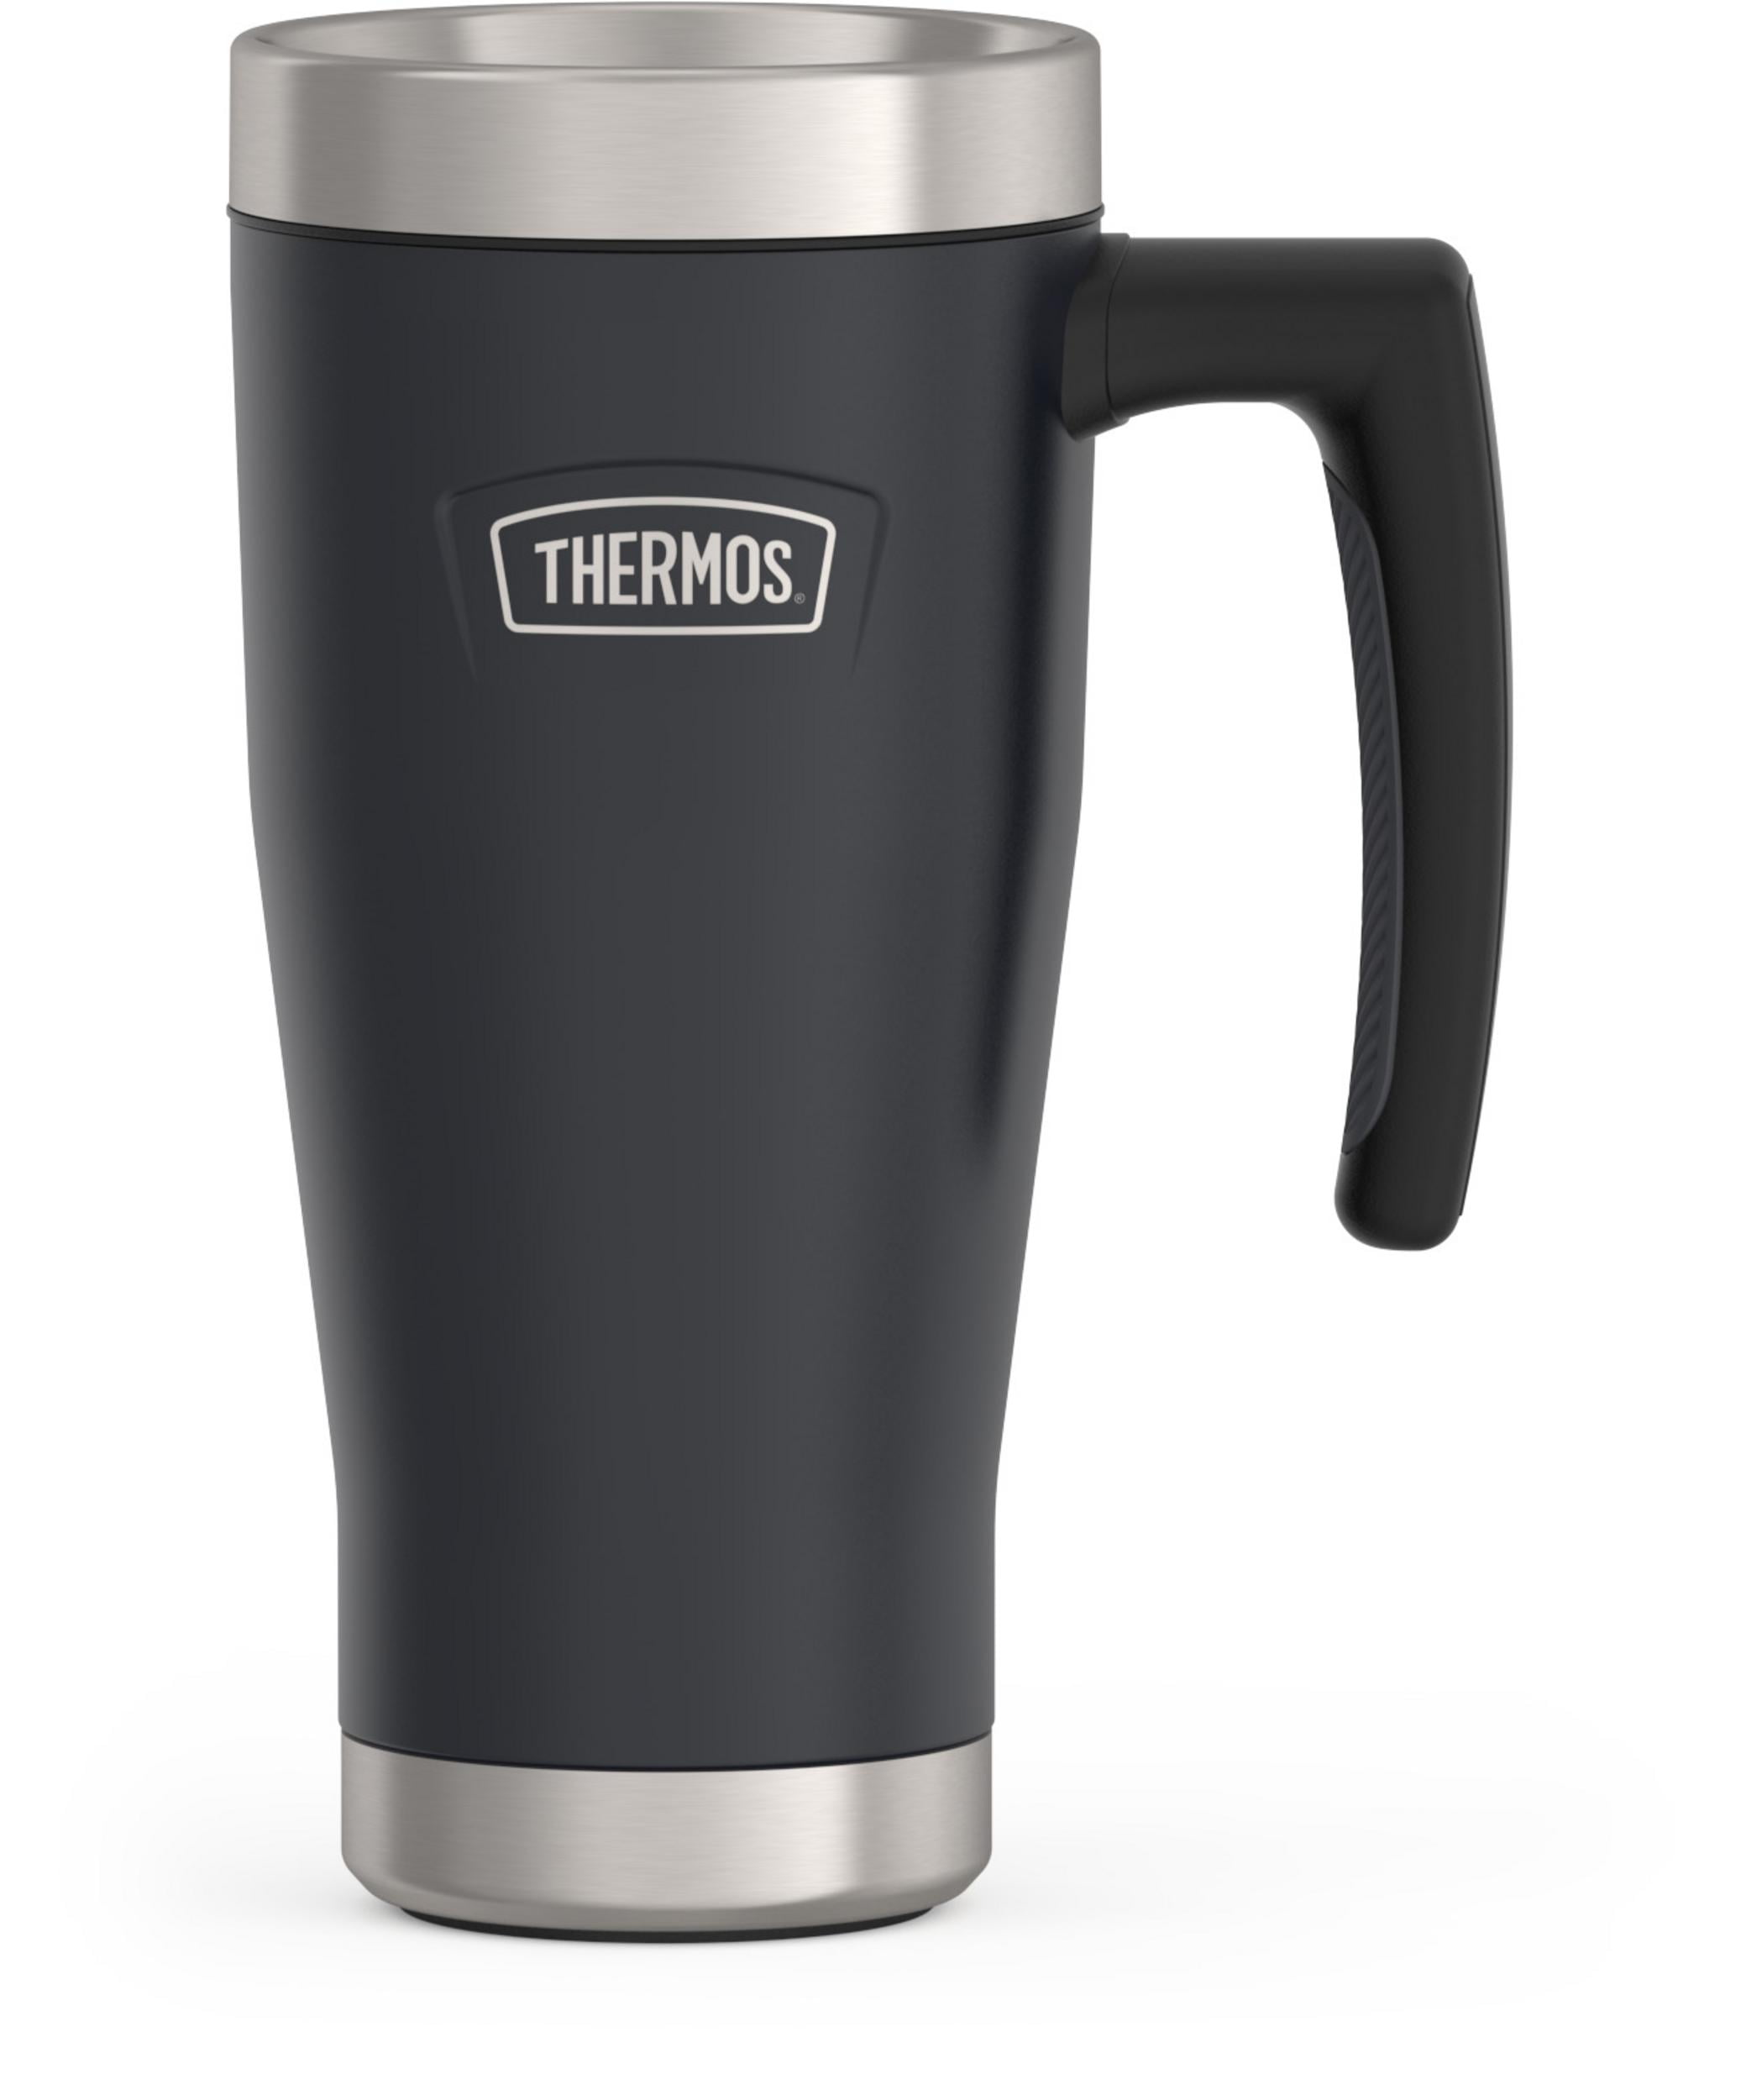 Thermos ICON Series Stainless Steel Vacuum Insulated Mug, 16oz, Saddle 